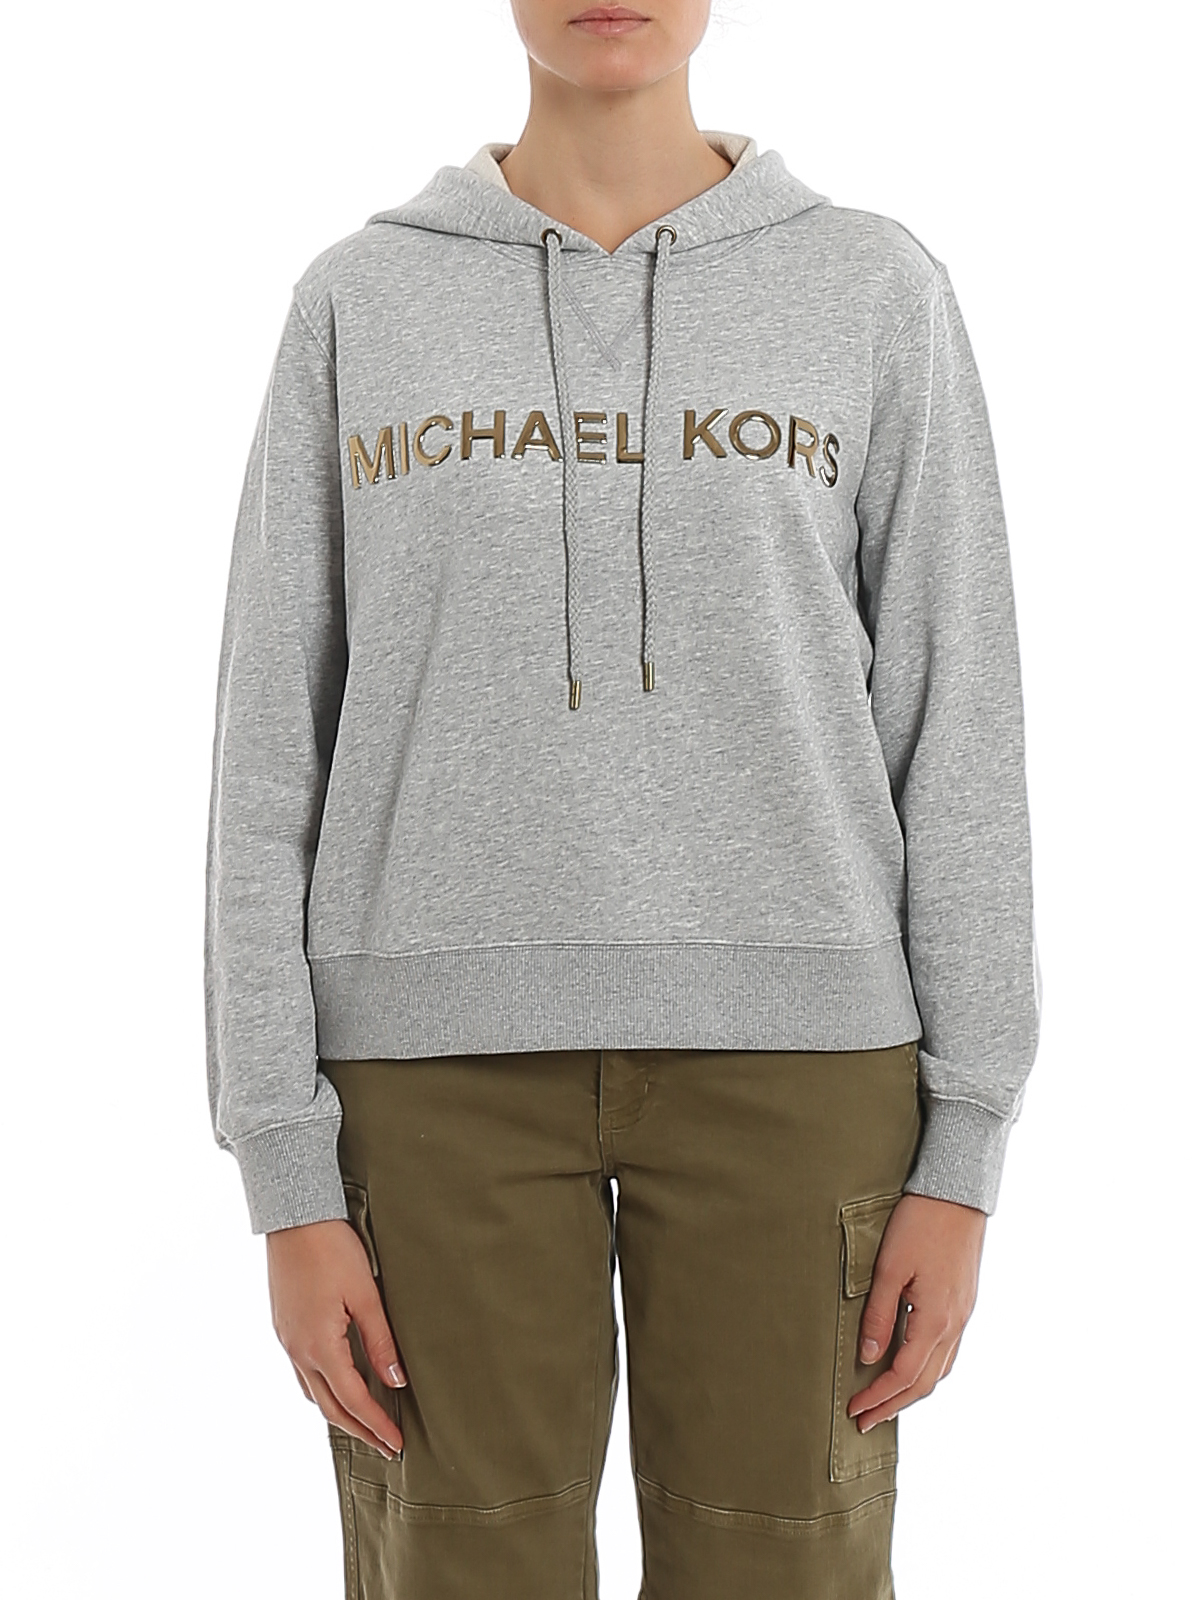 Michael Kors - Relief logo hoodie 